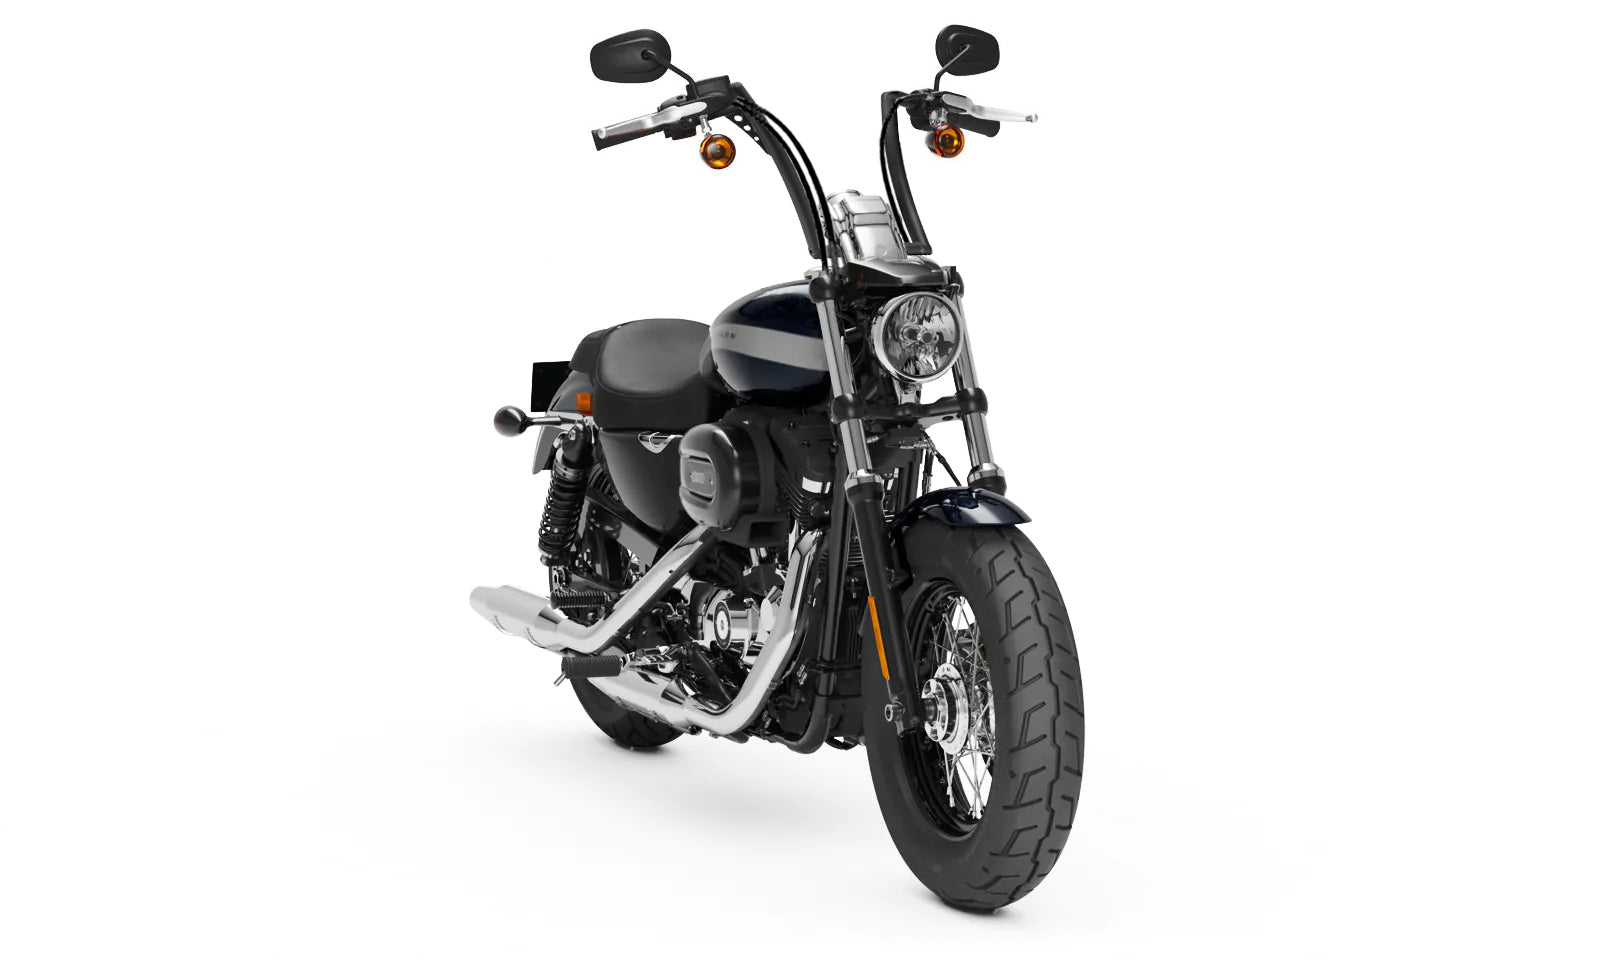 Viking Iron Born 12" Handlebar for Harley Sportster 1200 Custom XL1200C Matte Black Bag on Bike View @expand